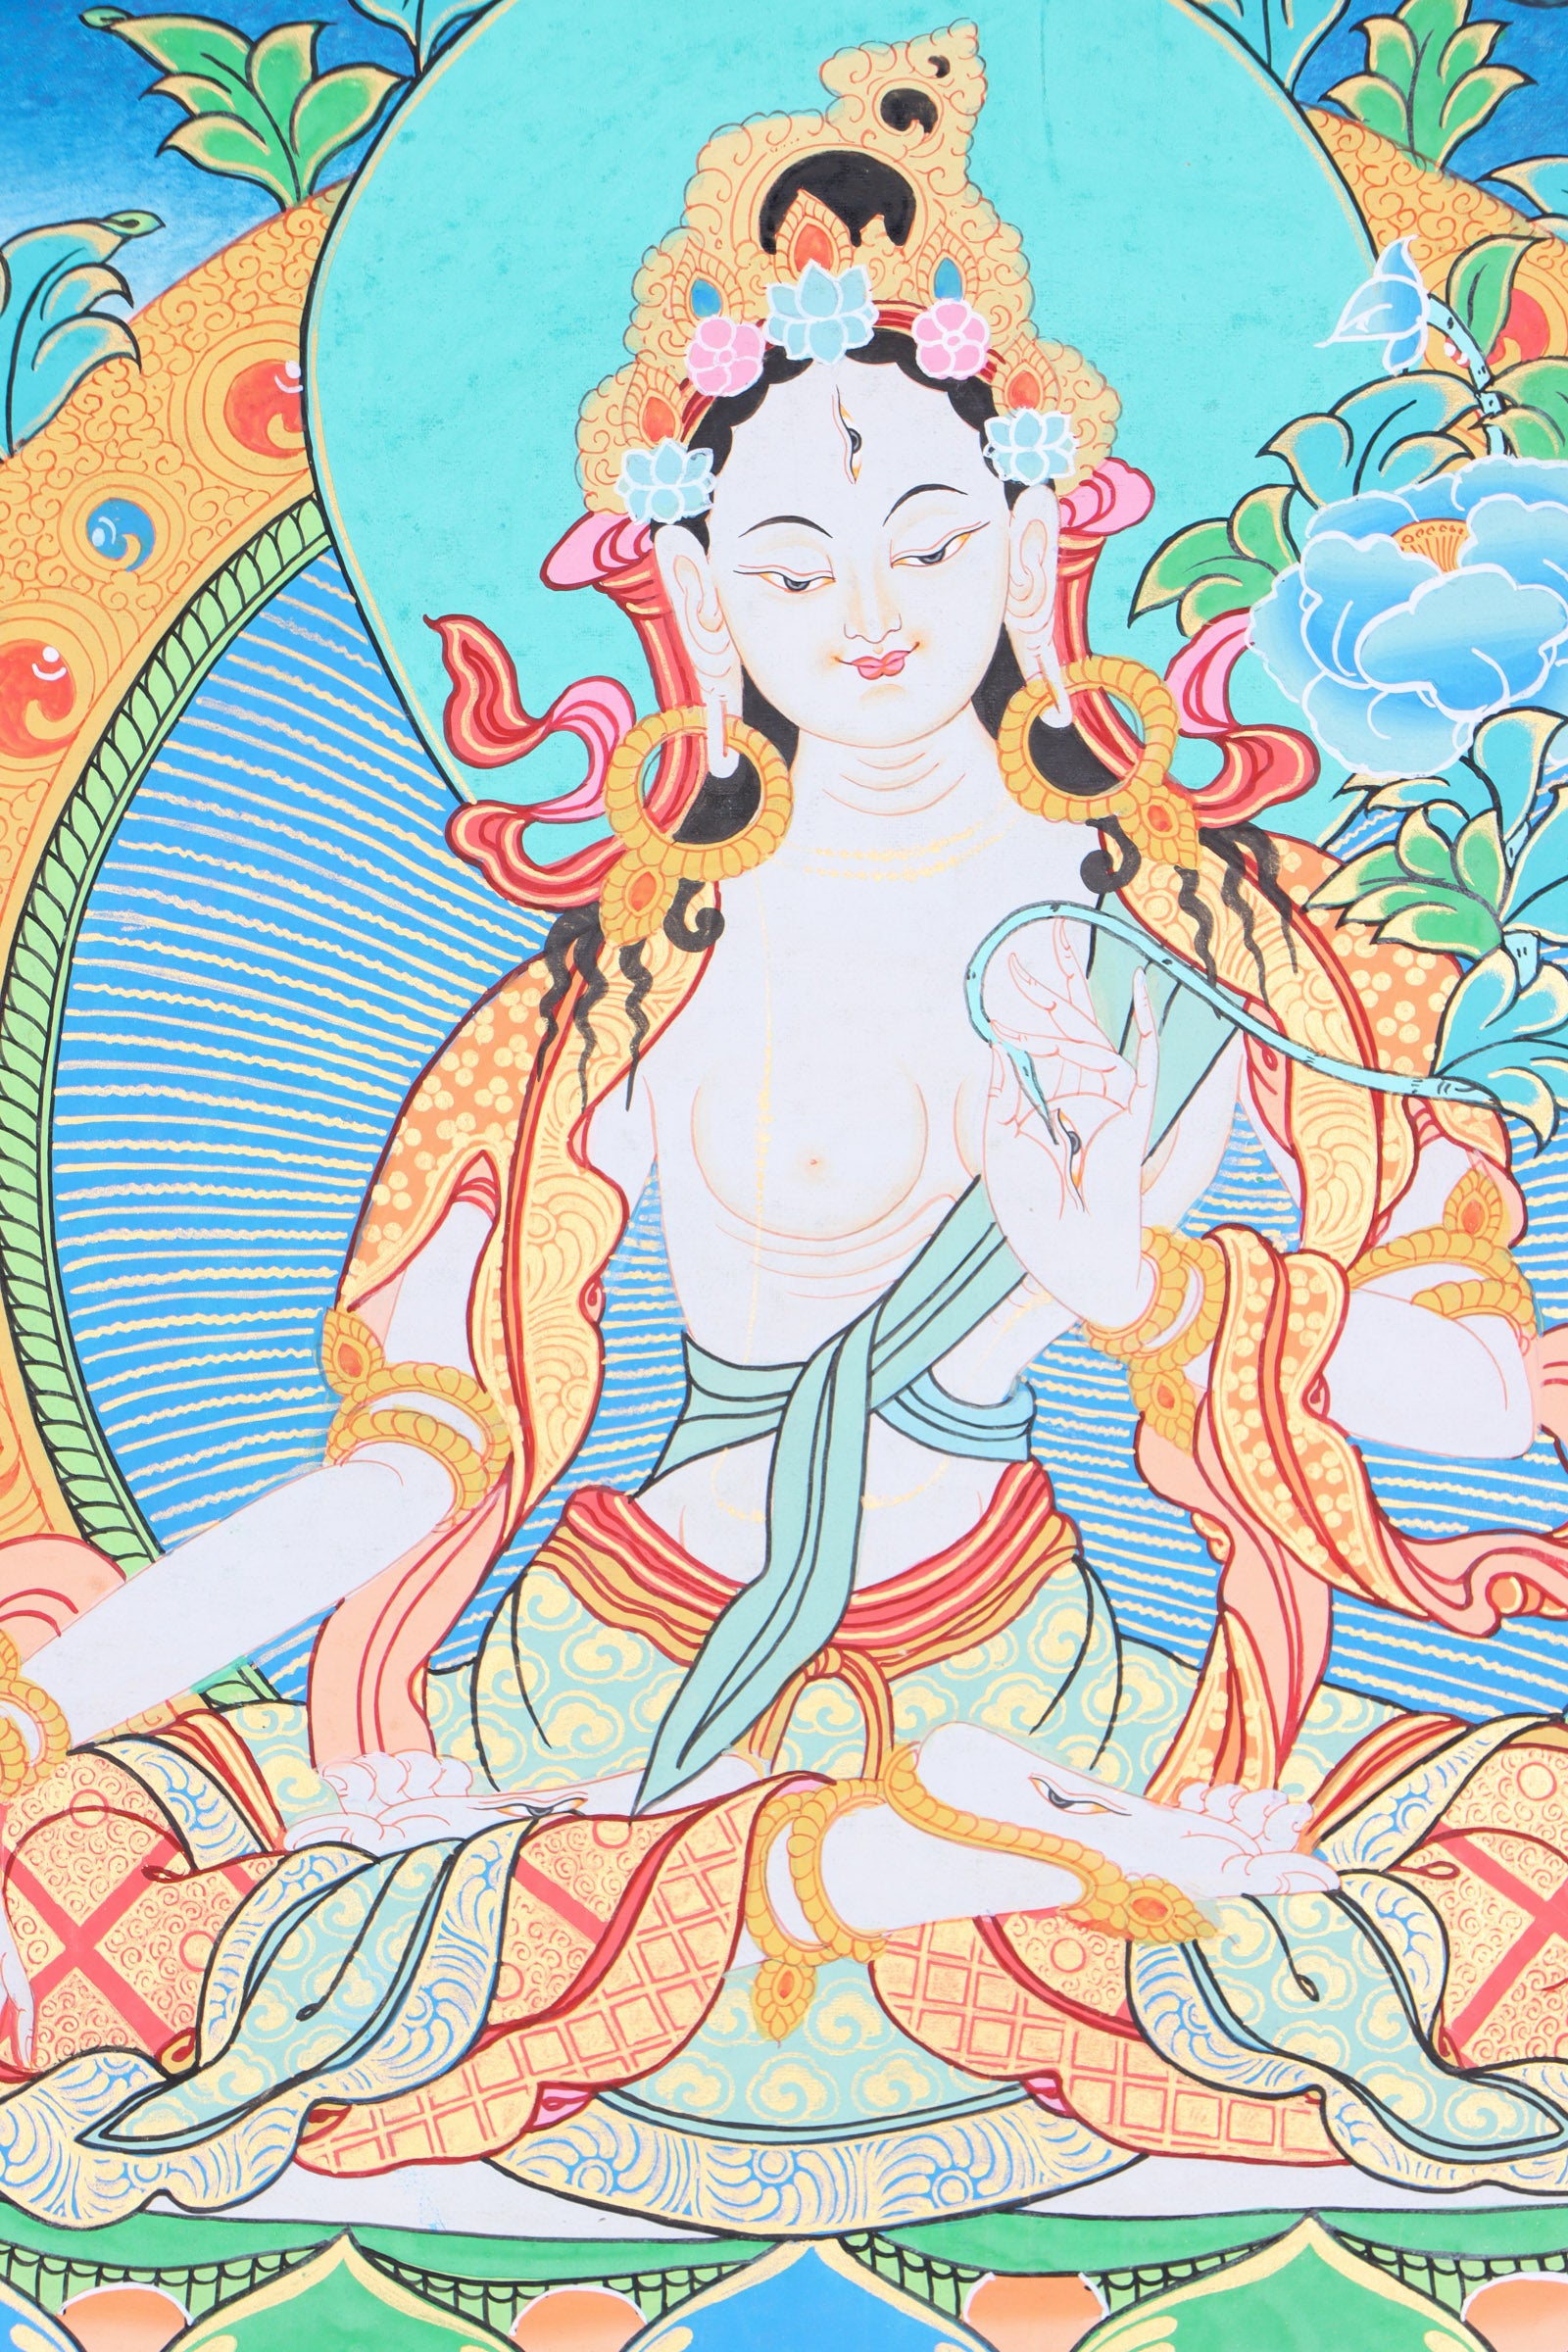 White Tara thangka painting for compassion, longevity, and healing.